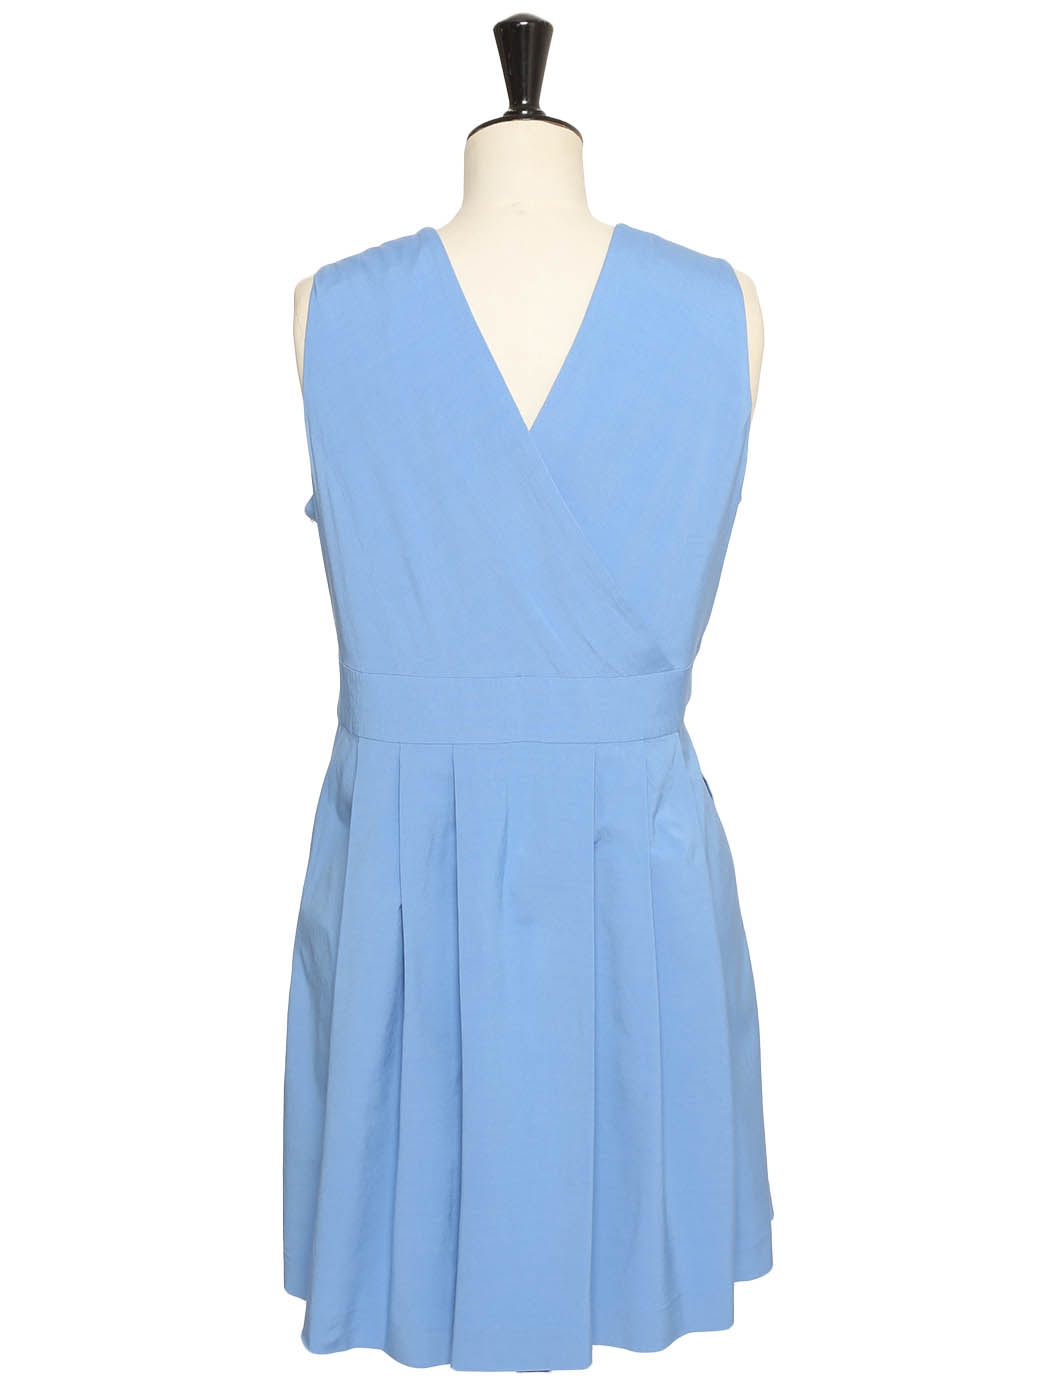 Boutique ESCADA Light blue satin large strap V neckline dress Retail price  €1300 Size 40/42